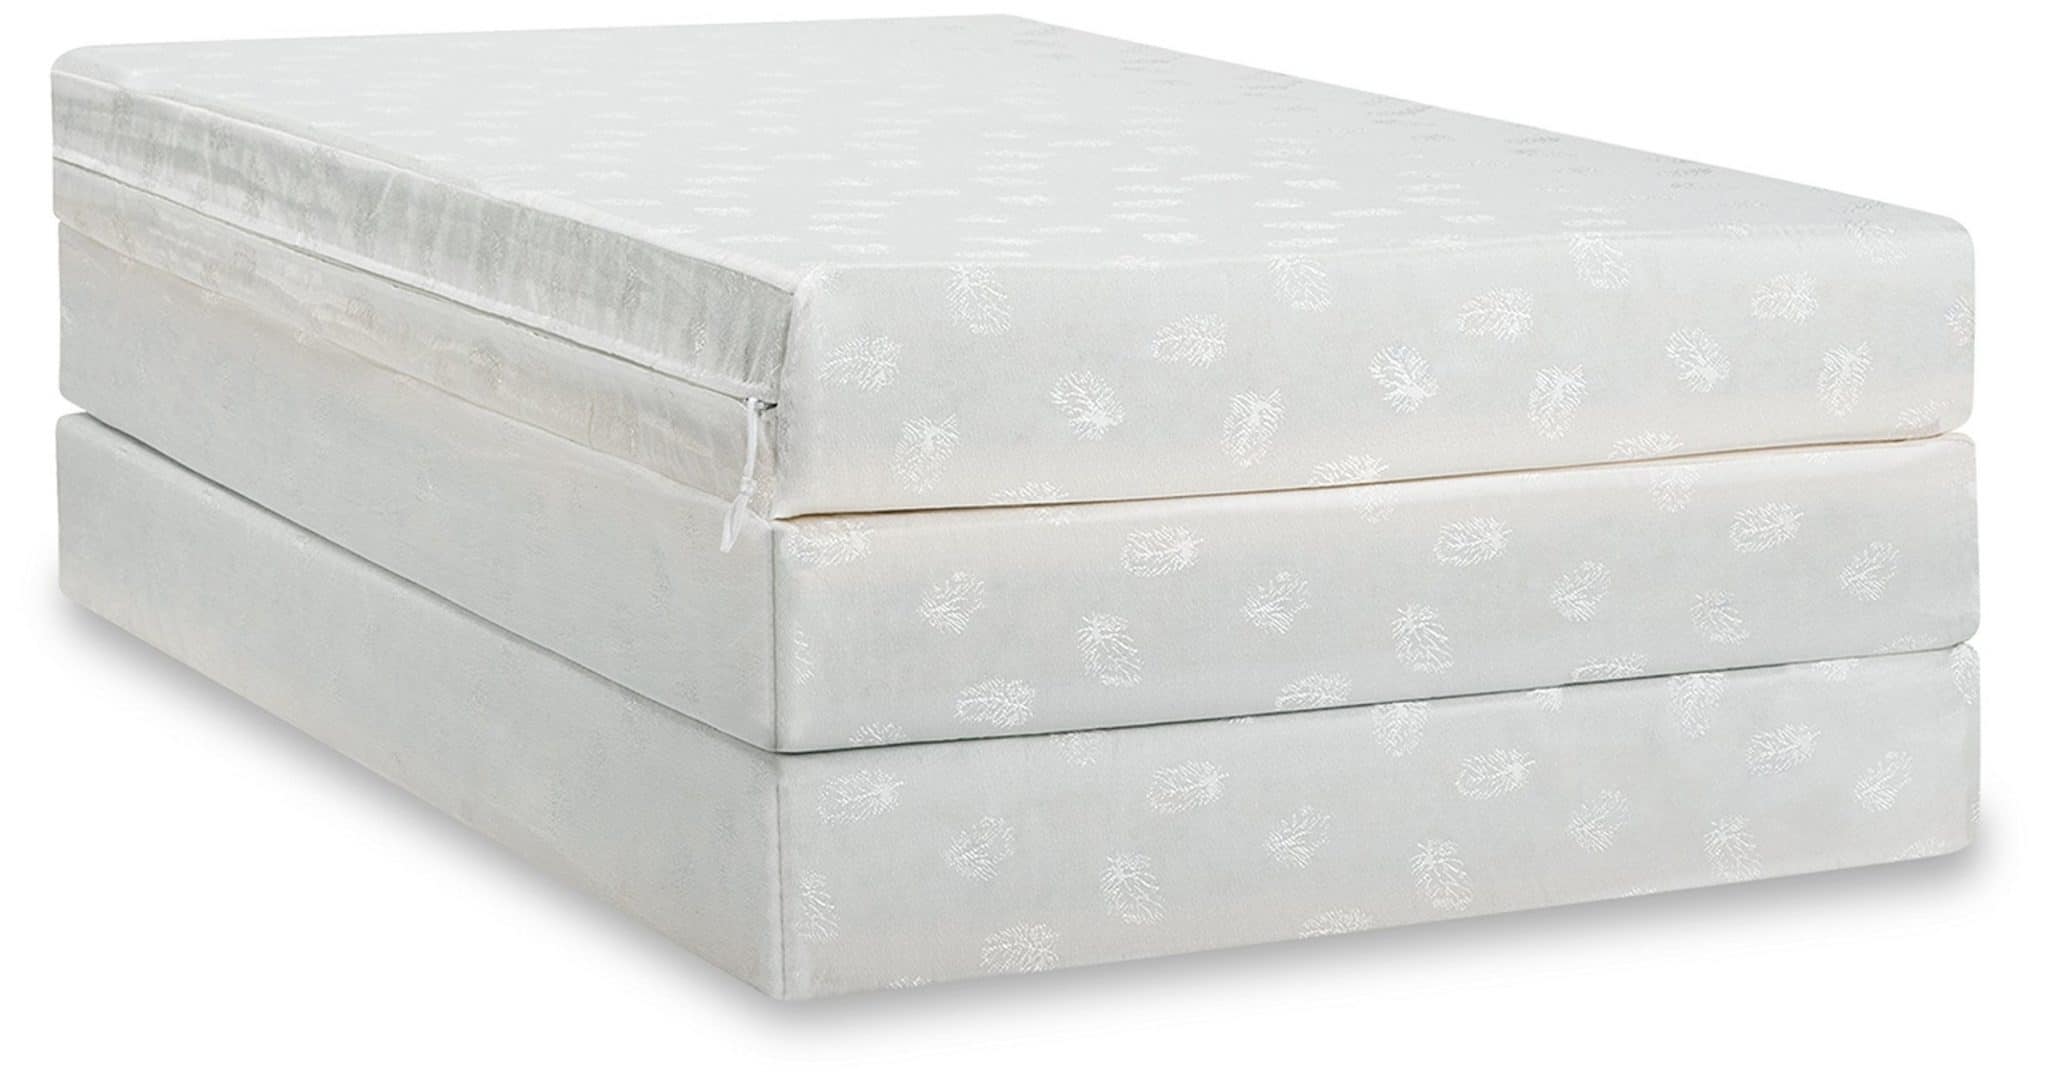 king mattress made to fold